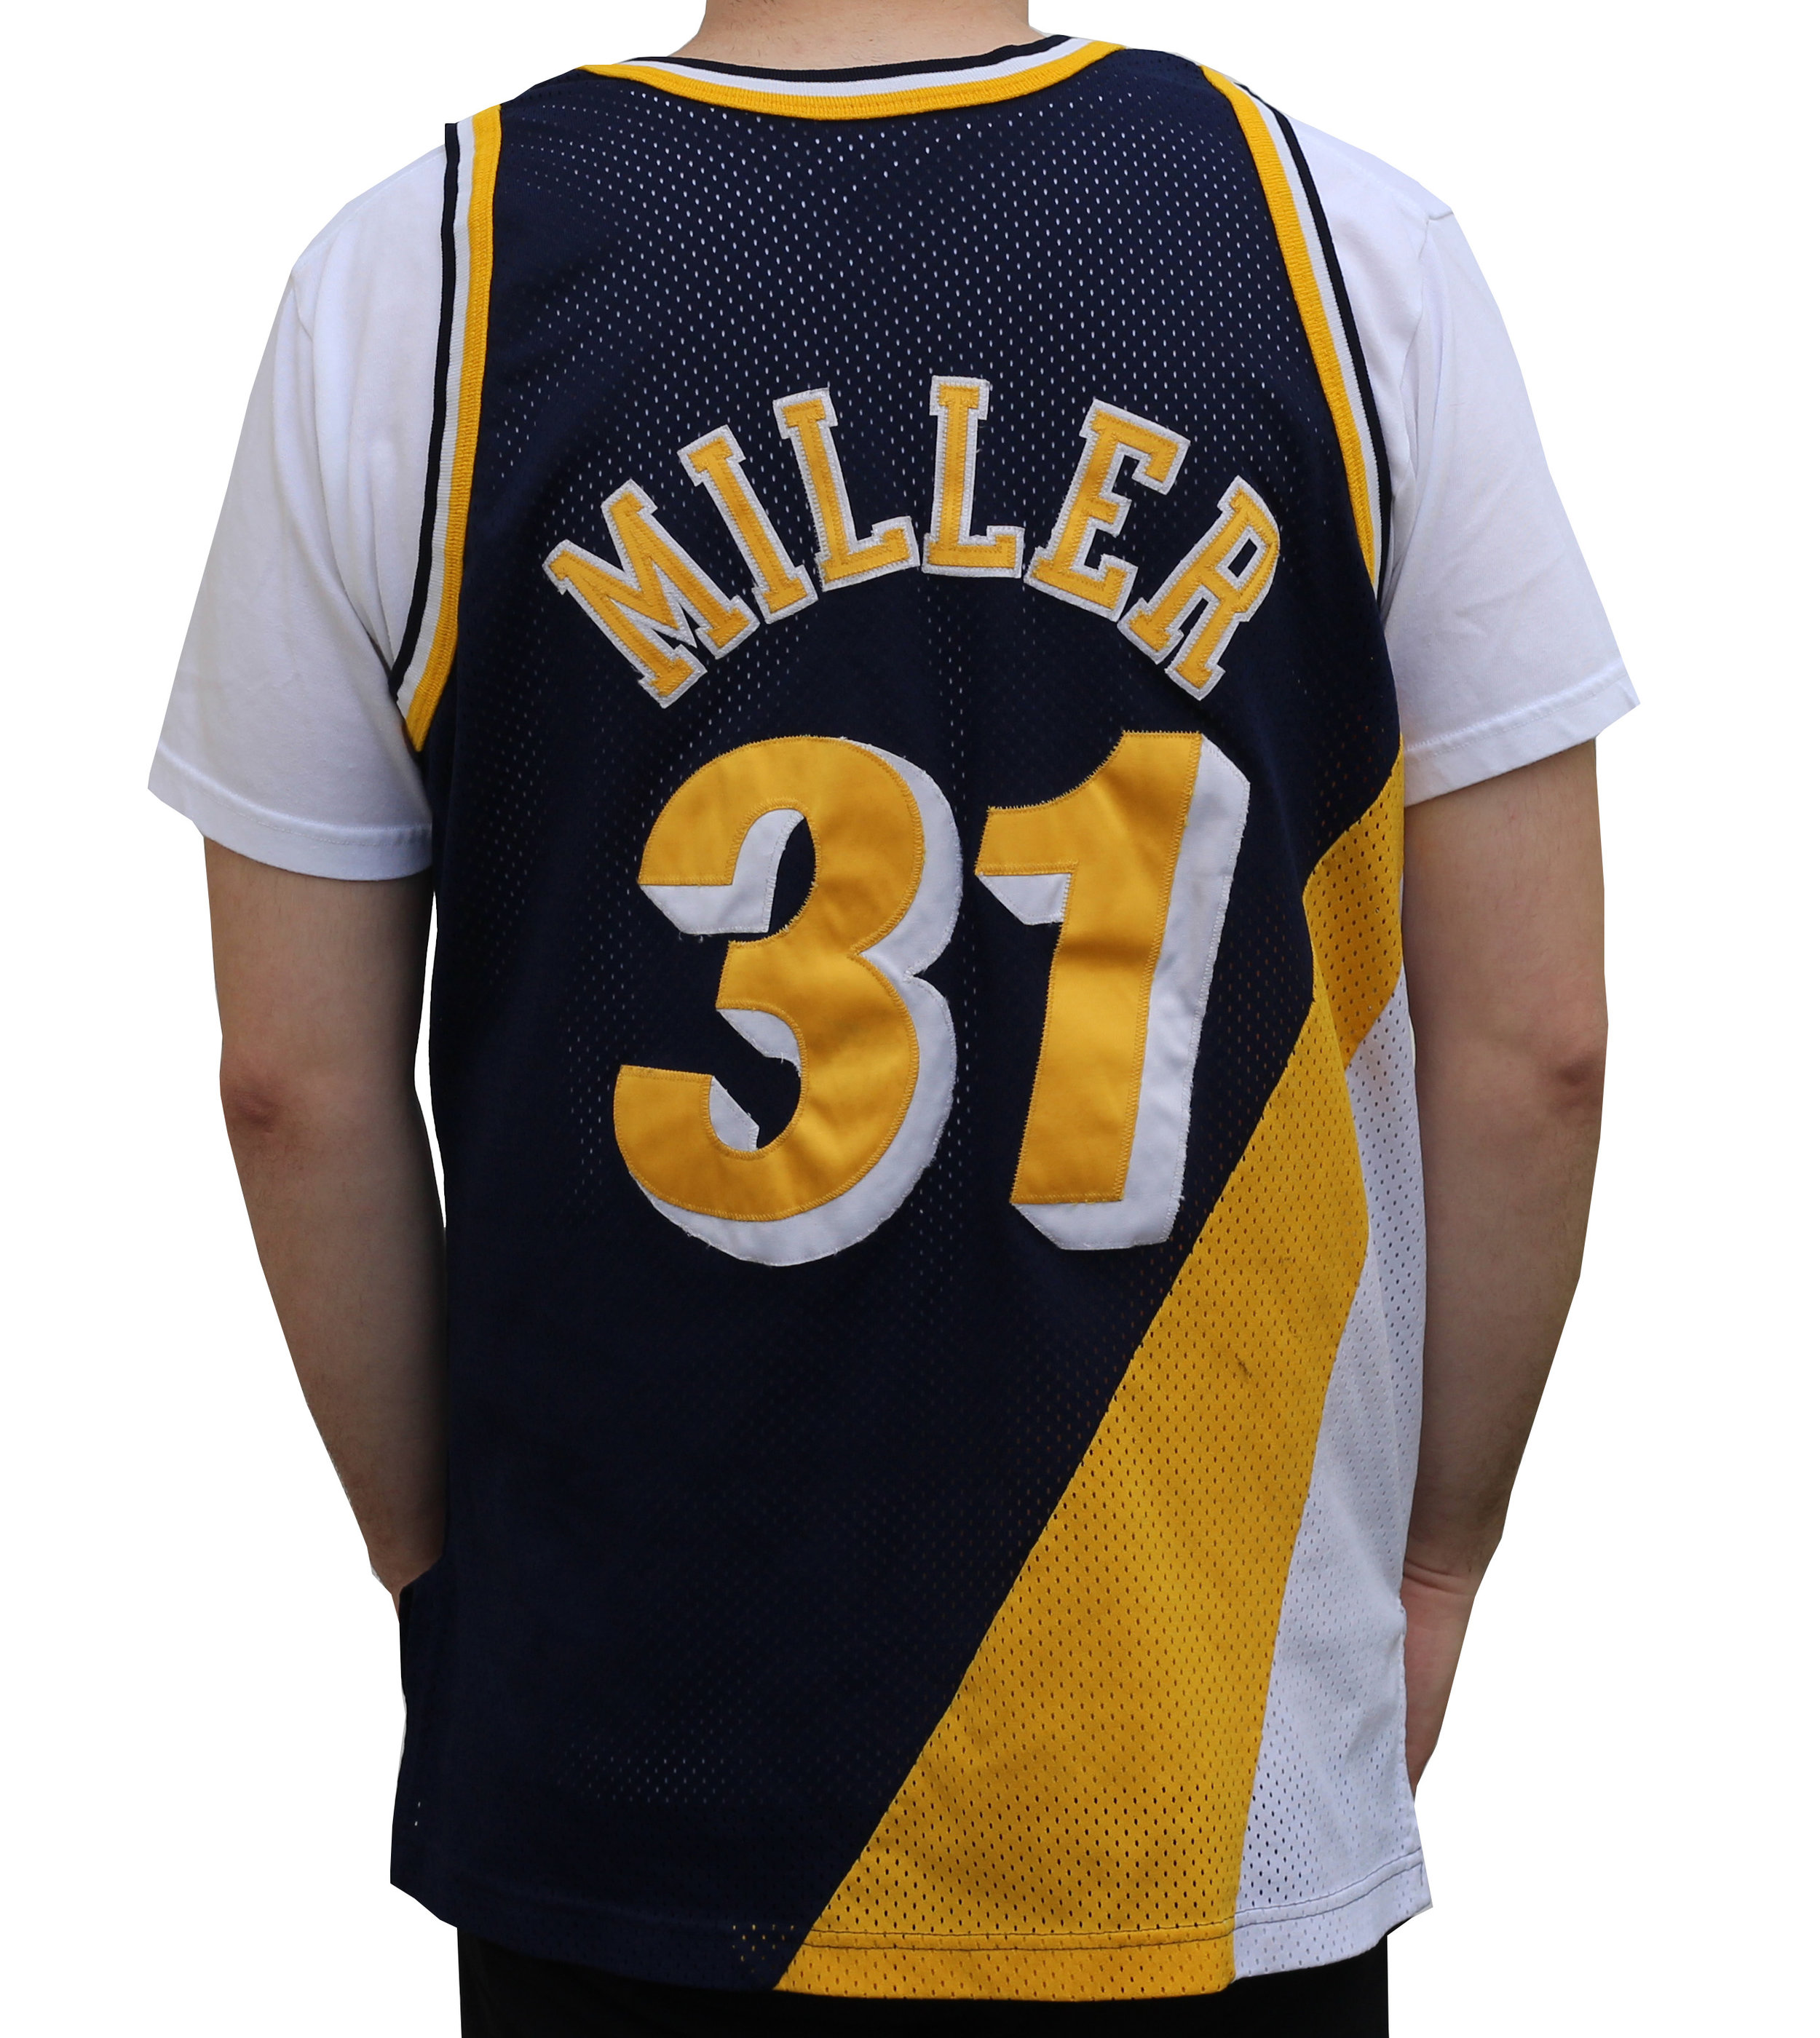 reggie miller jersey for sale